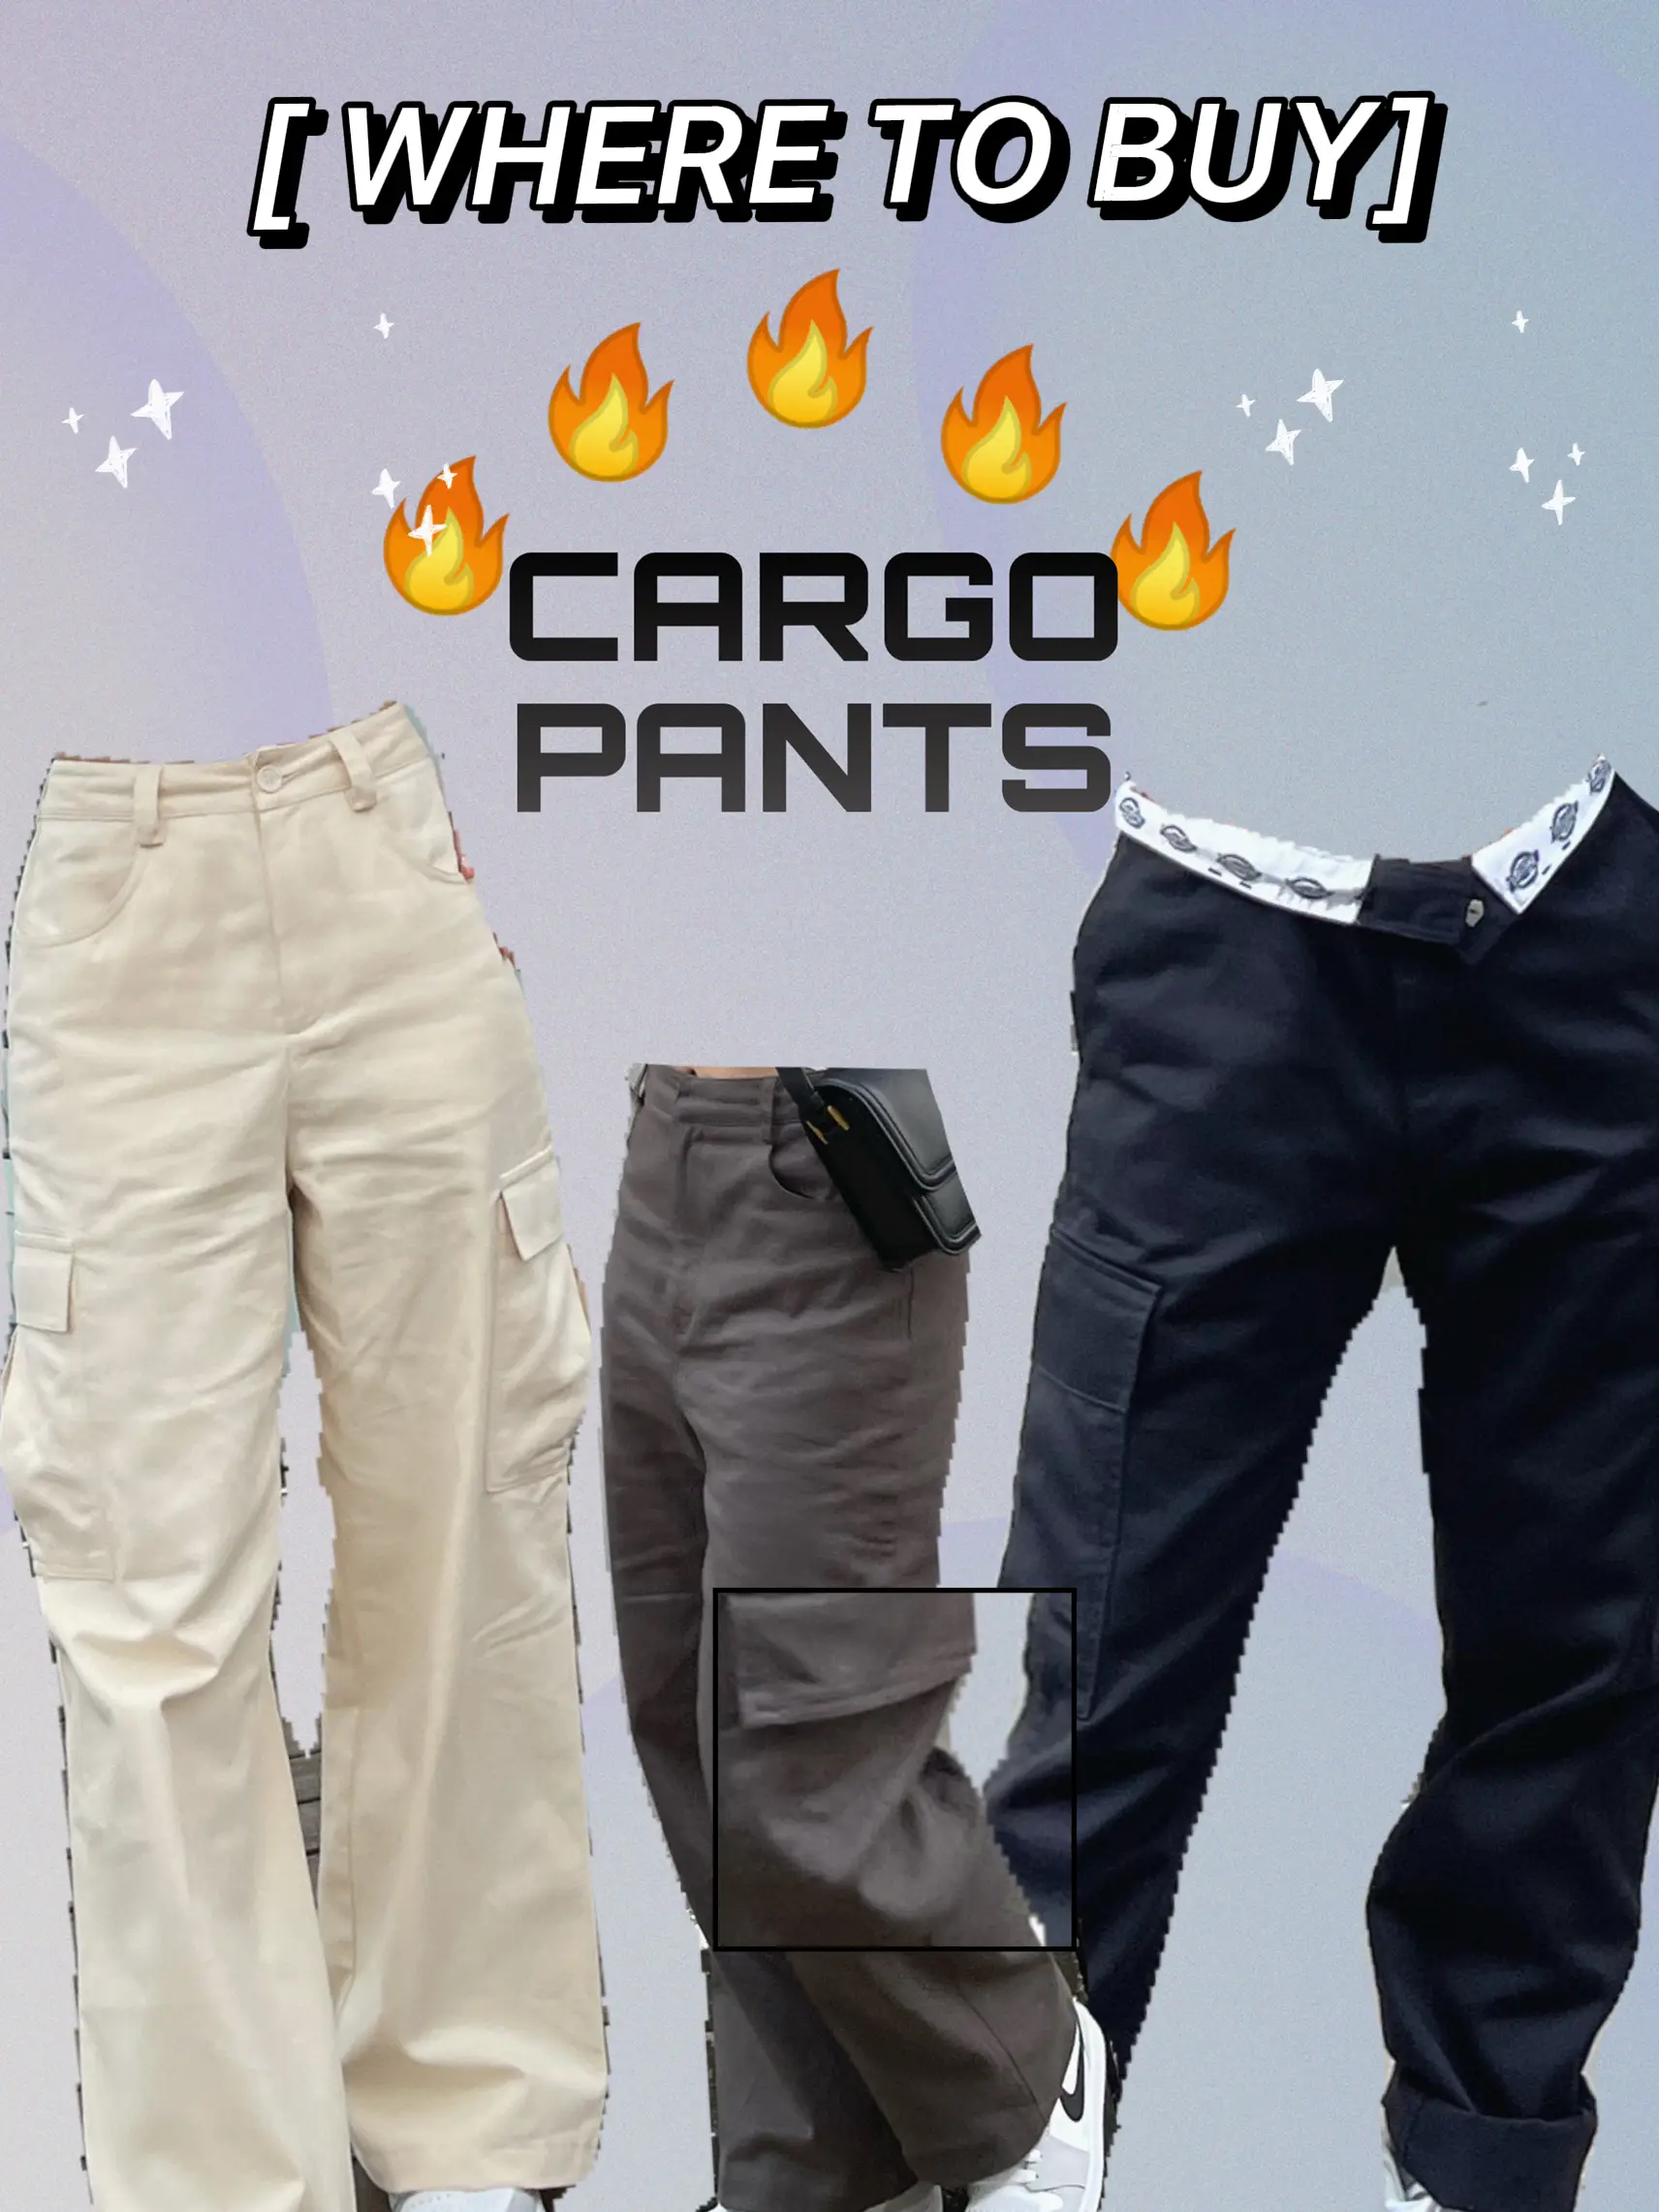 Trevor Denim Cargo Pants (Light Wash)